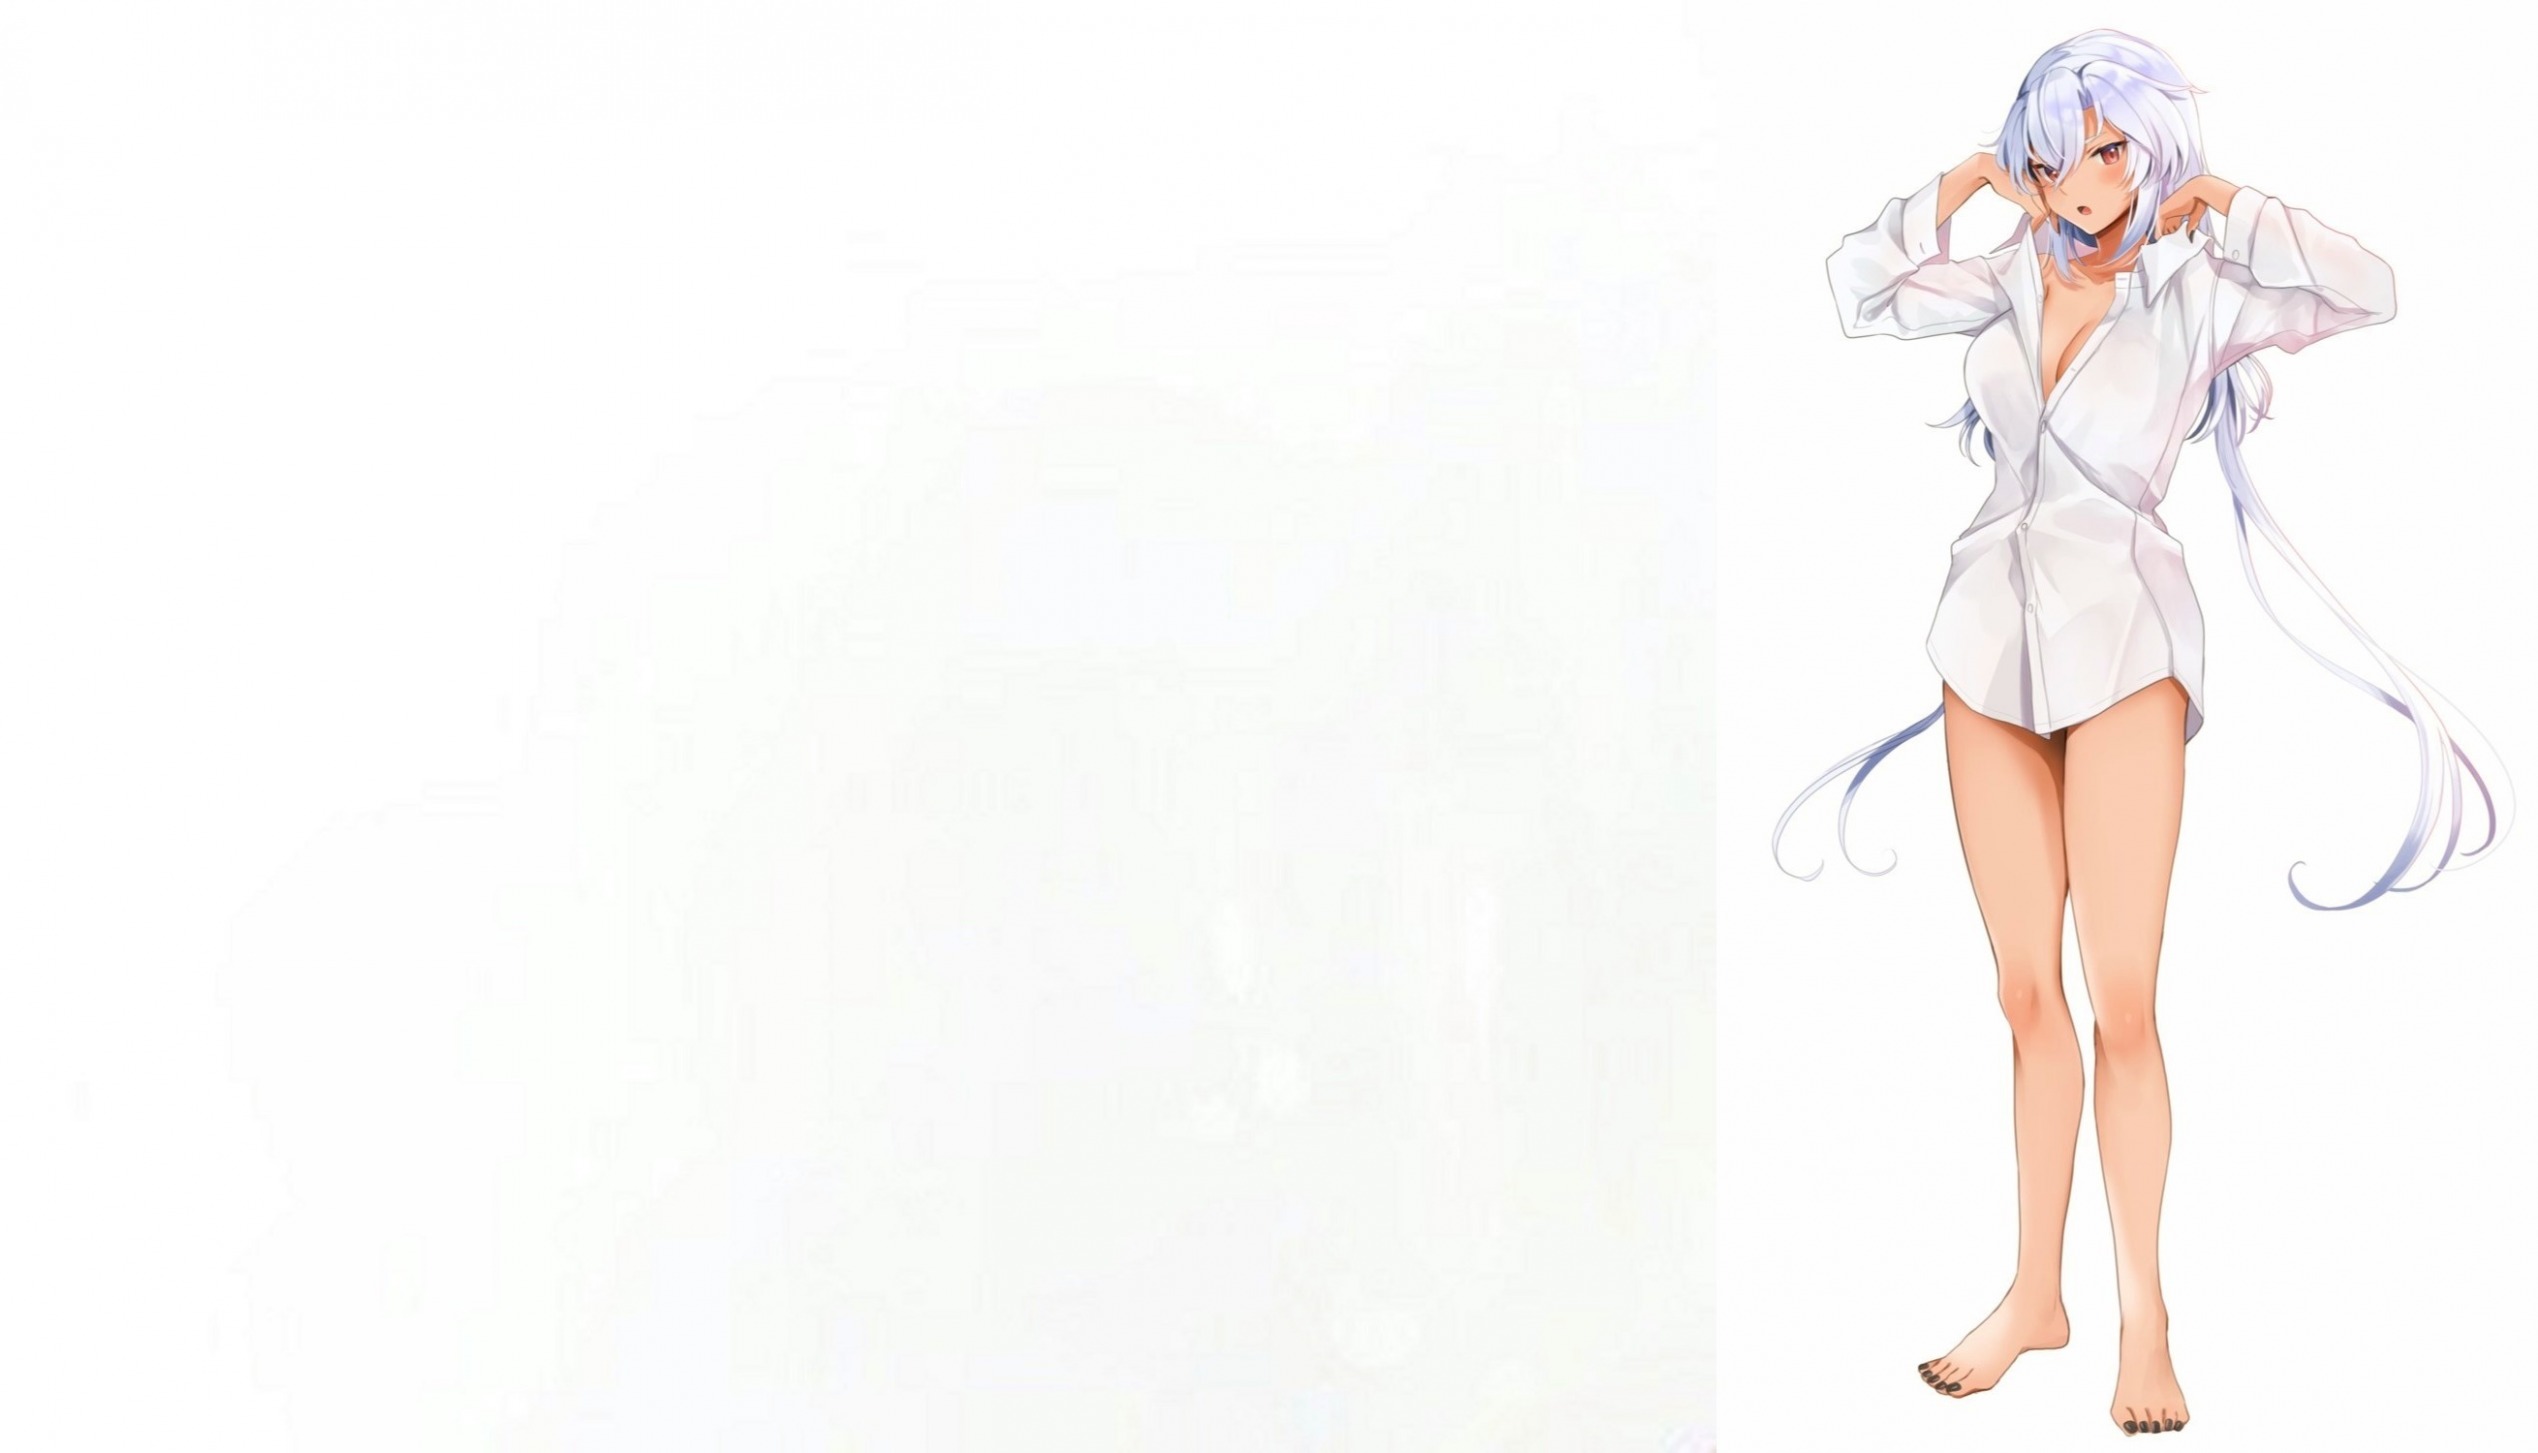 Hot anime girl in dress shirt Blank Template - Imgflip